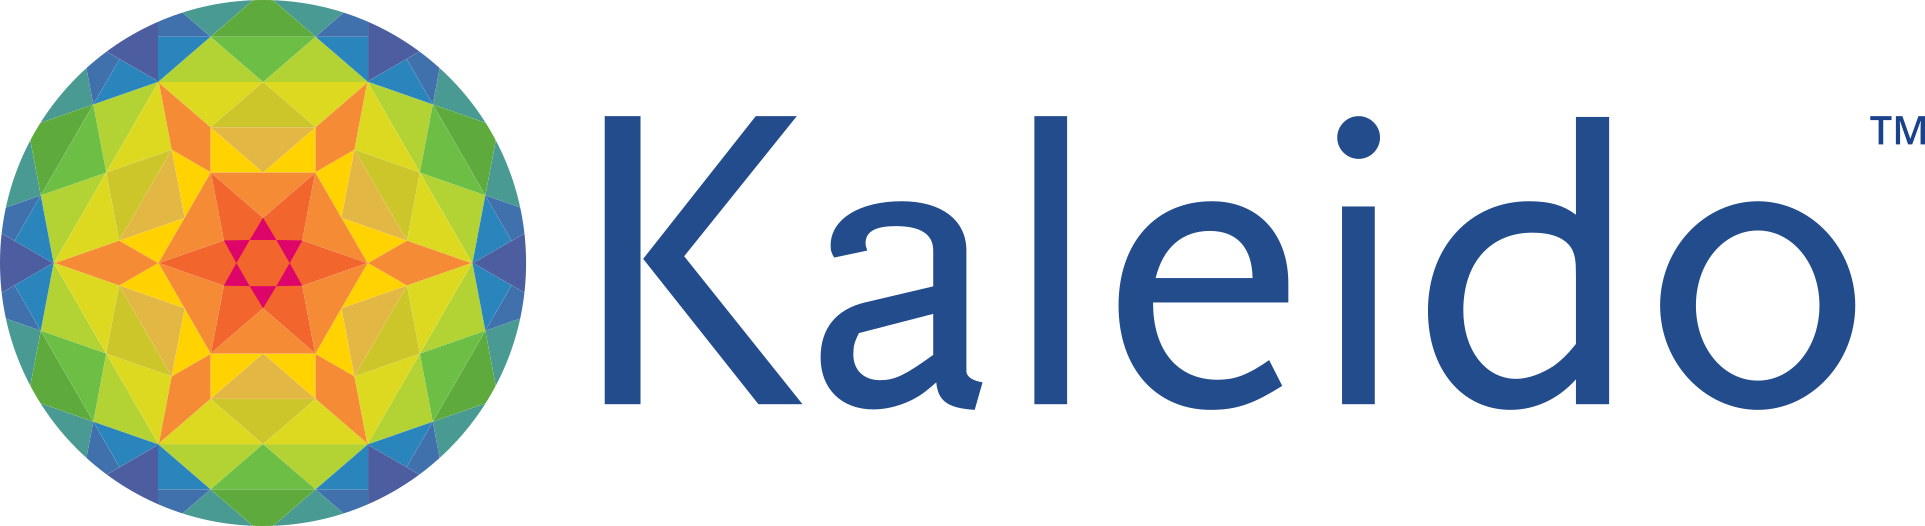 About Us - Kaleido Biosciences Logo Clipart (1925x526), Png Download